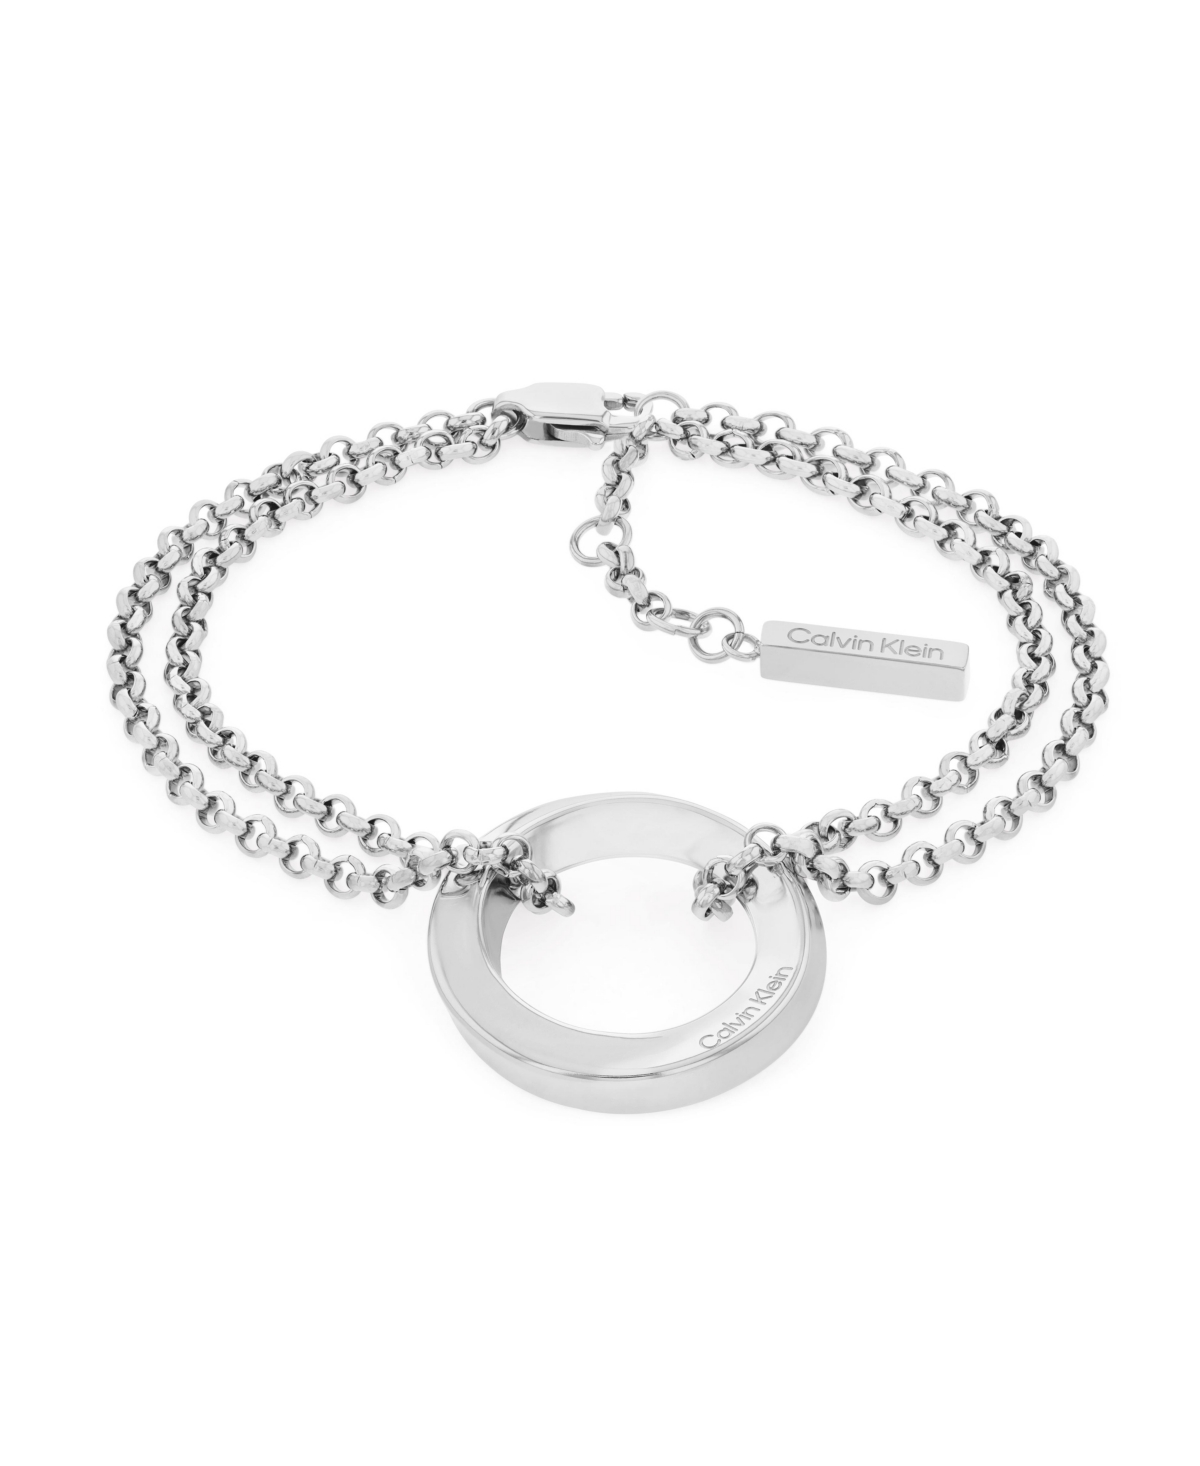 Calvin Klein Women's Stainless Steel Dual Chain Bracelet